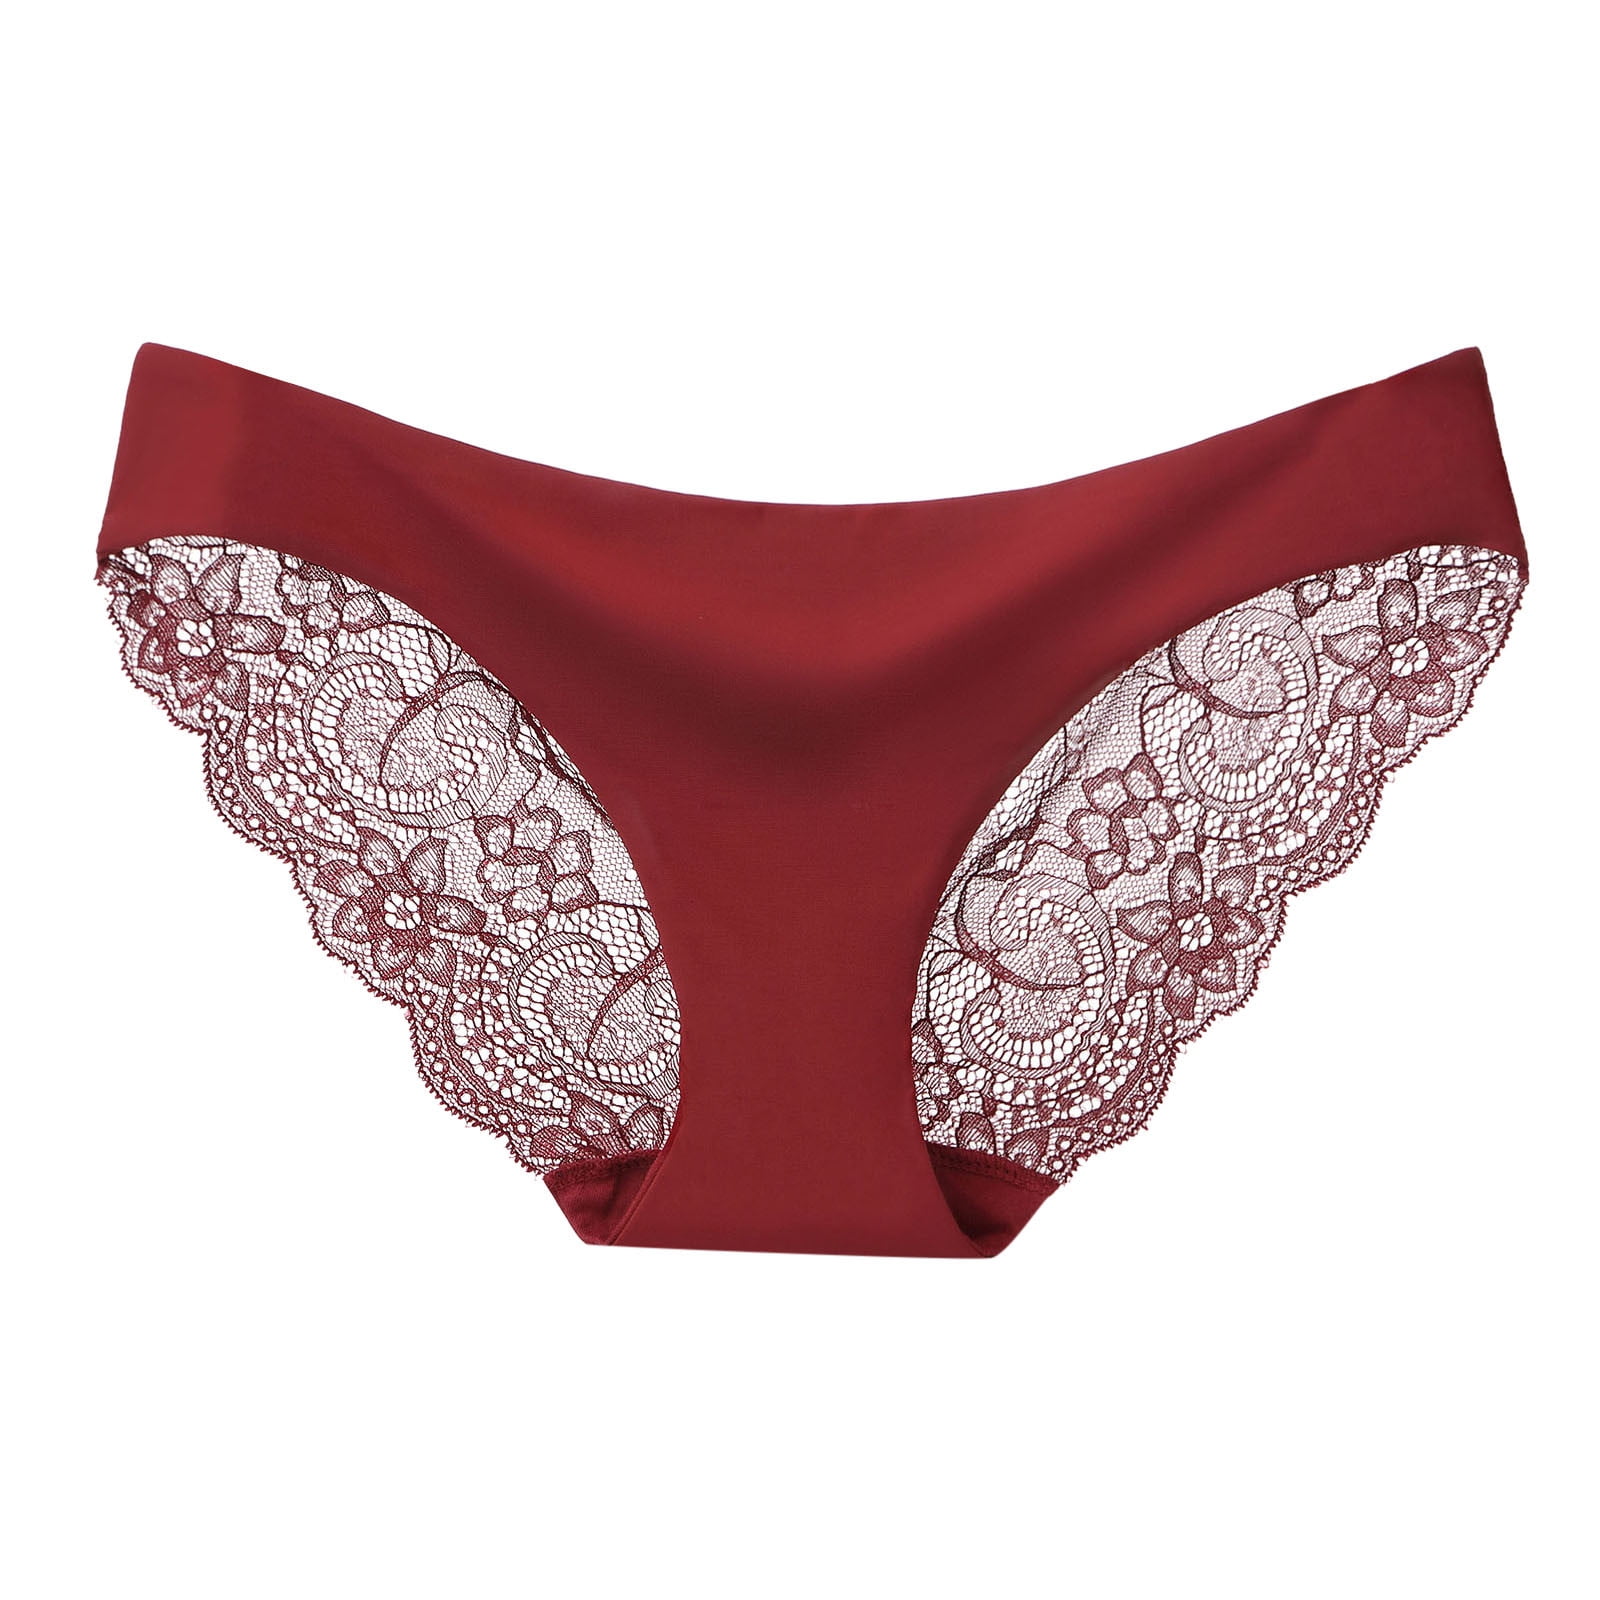 adviicd Lingerie for Women Women's 362° Stretch Underwear Red Small 